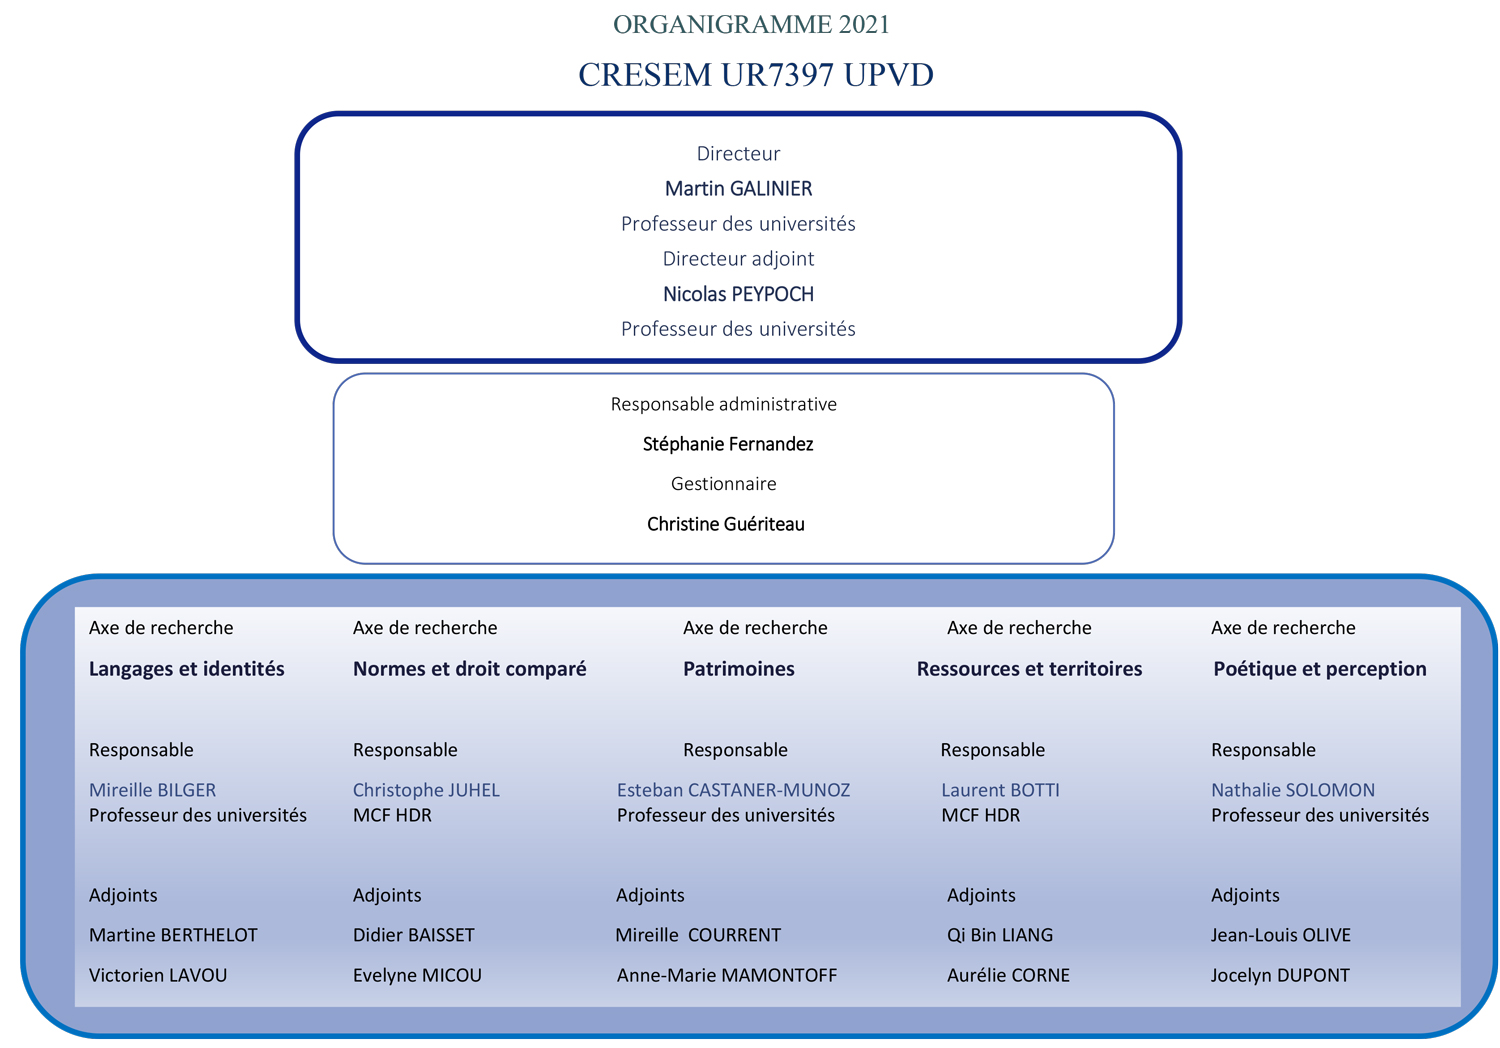 Organigramme CRESEM 2021